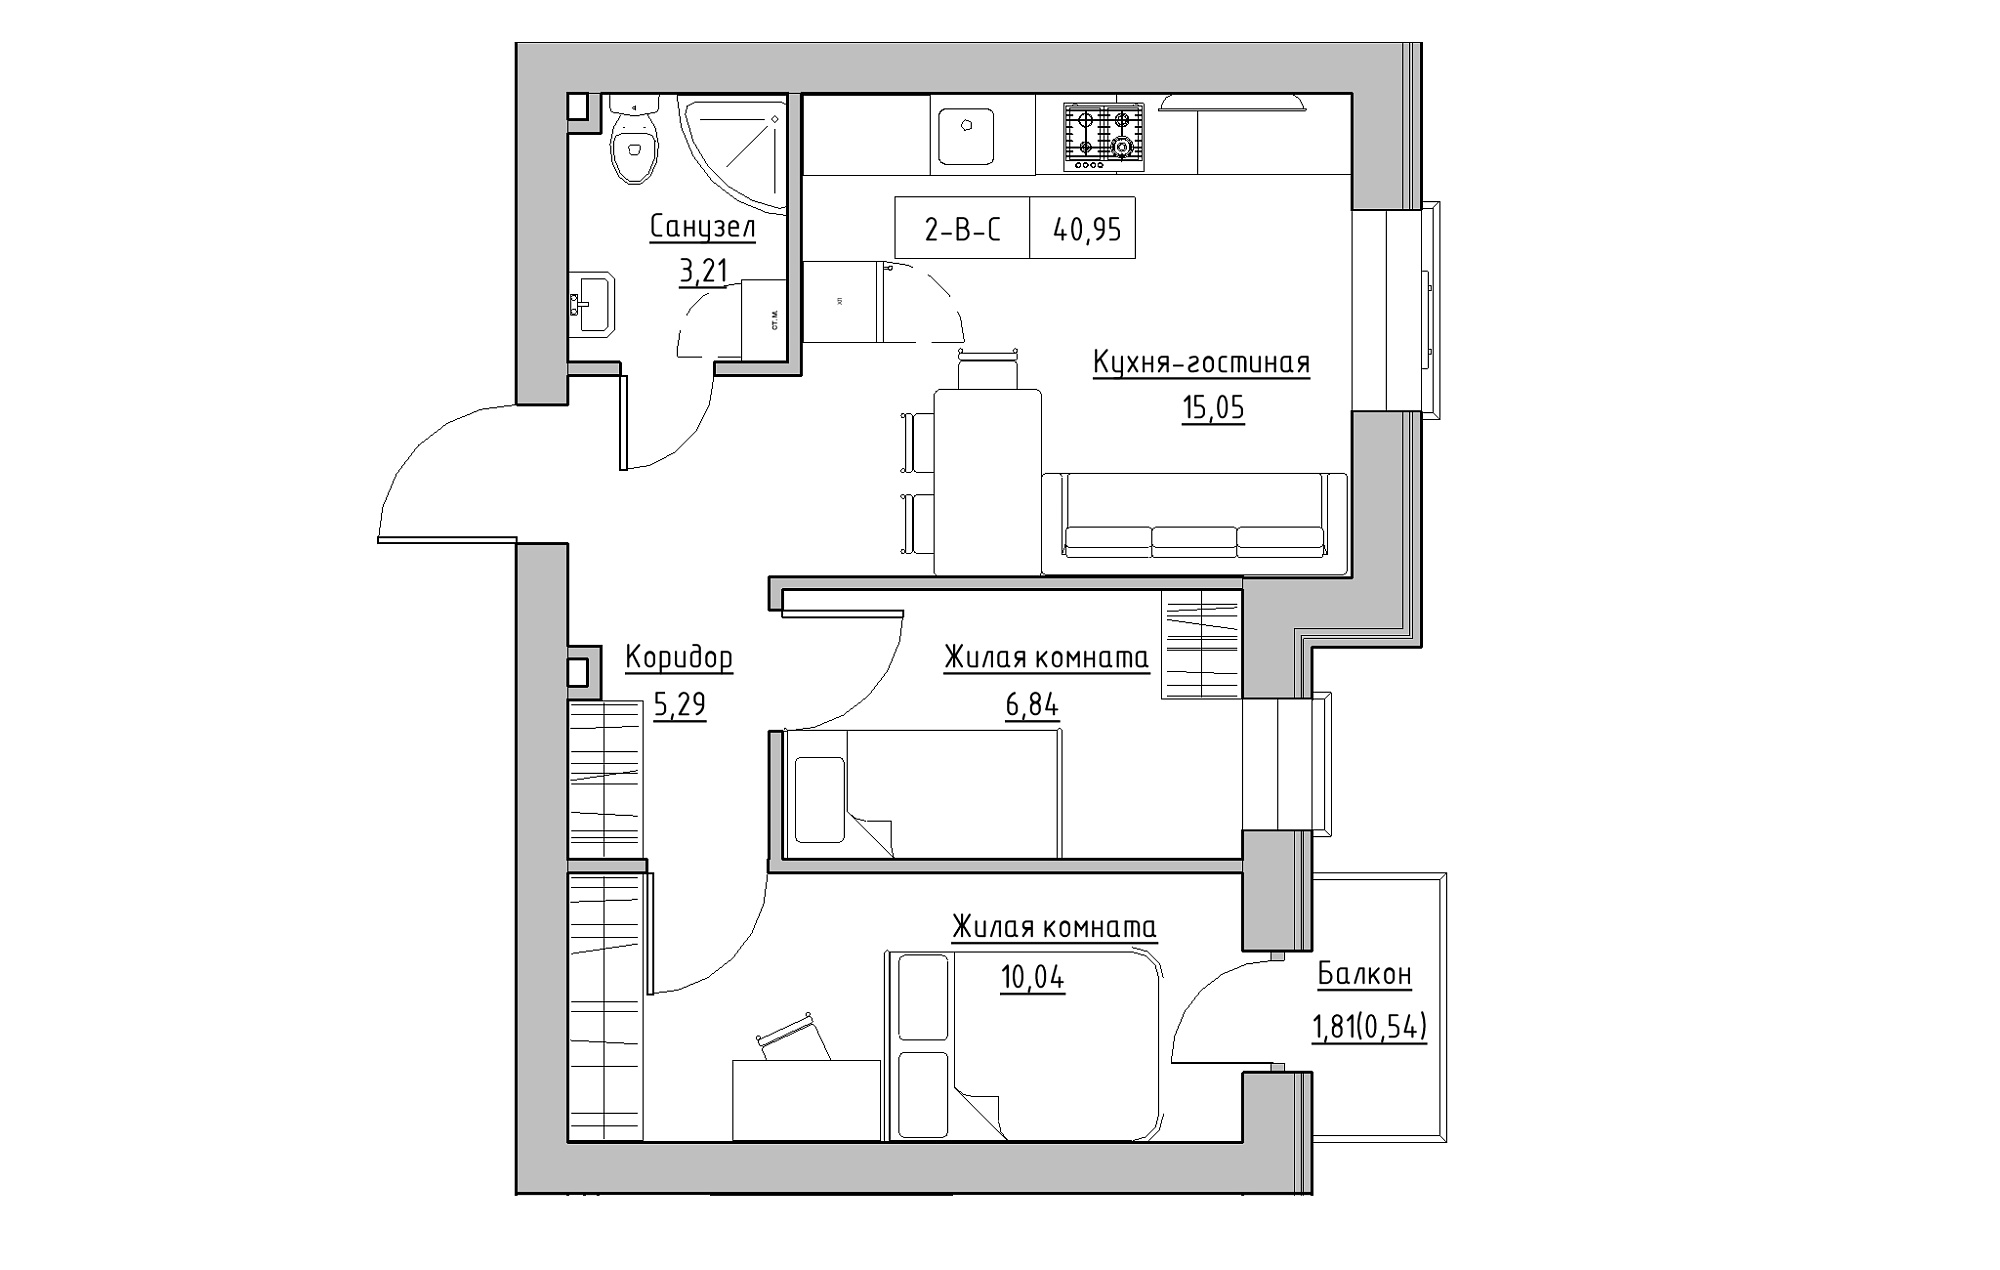 Planning 2-rm flats area 40.95m2, KS-018-02/0010.